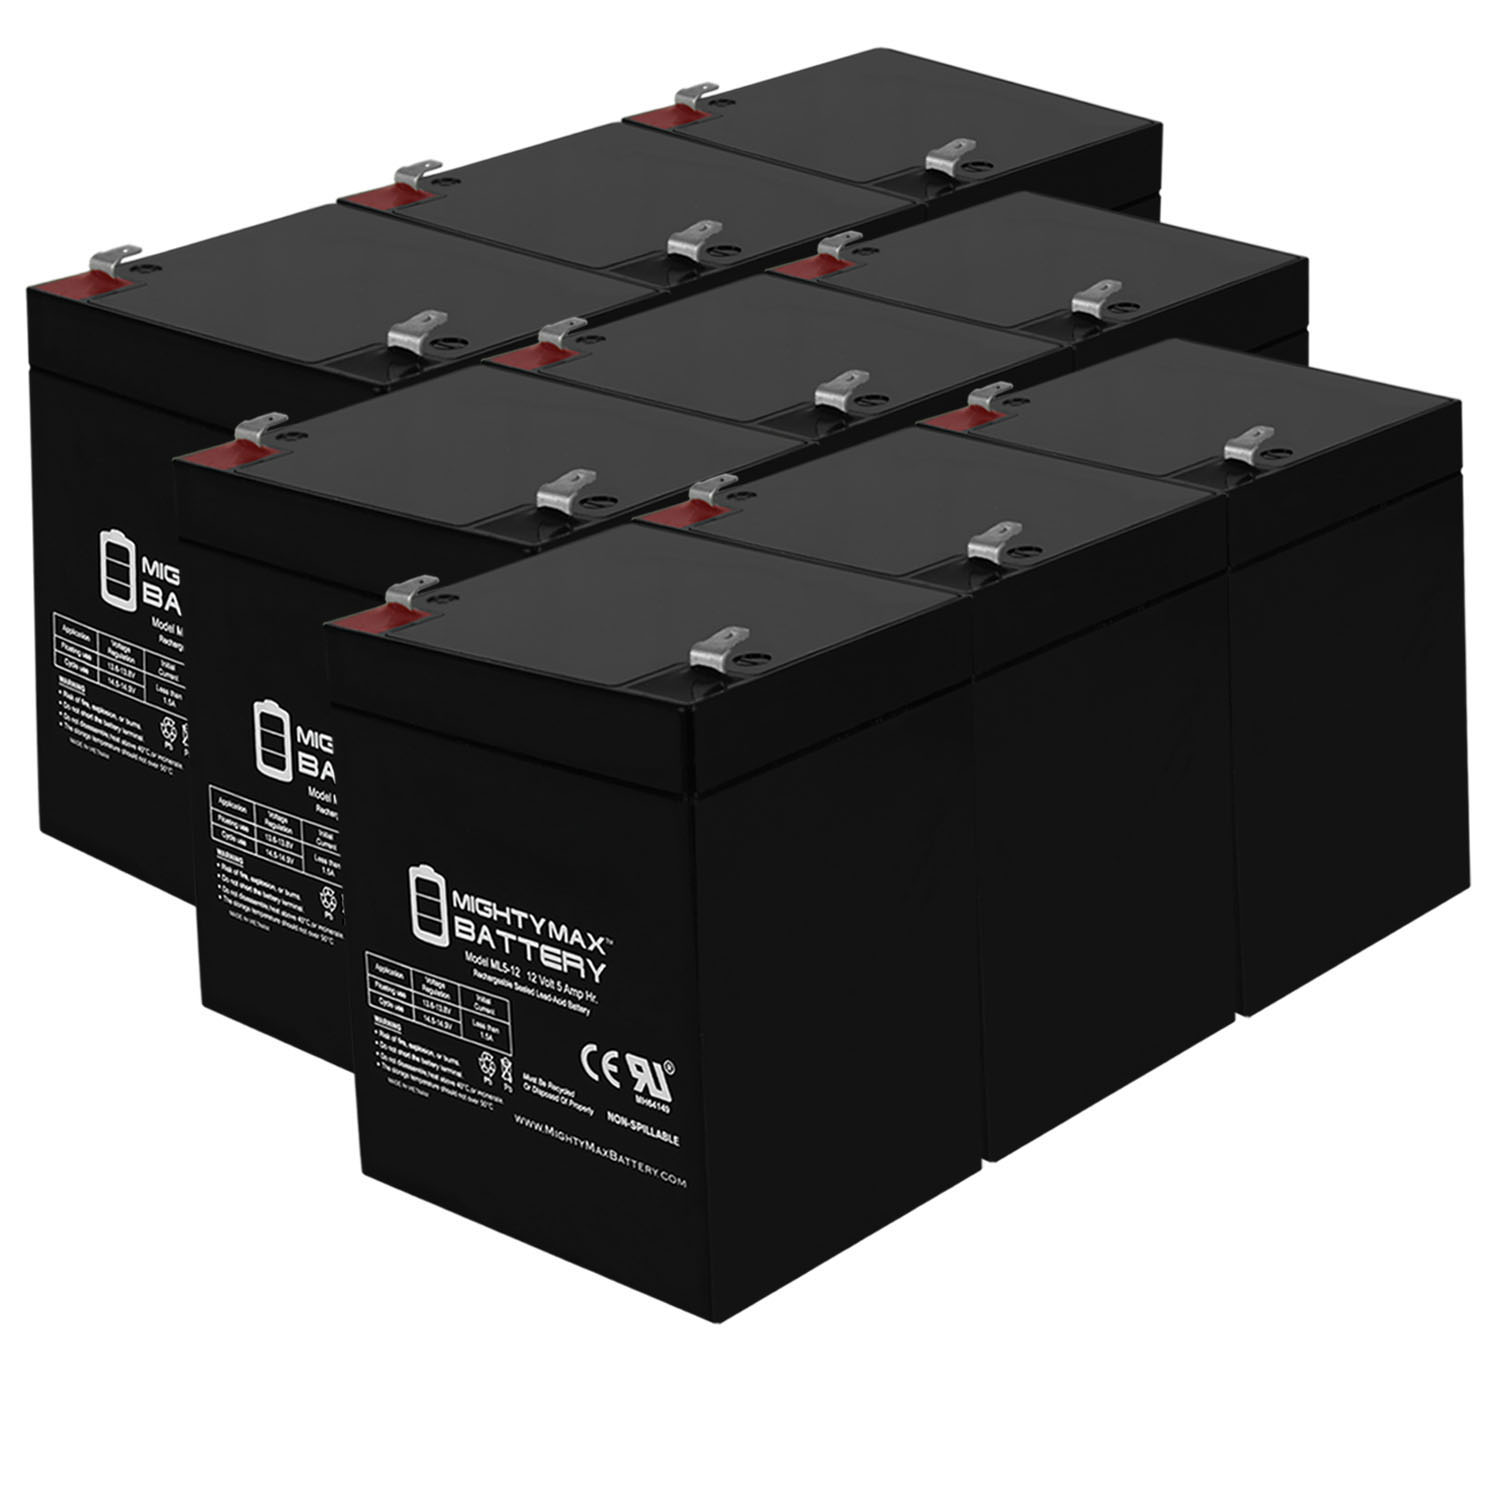 12V 5AH SLA Replacement Battery for KMG-5-12 - 9 Pack